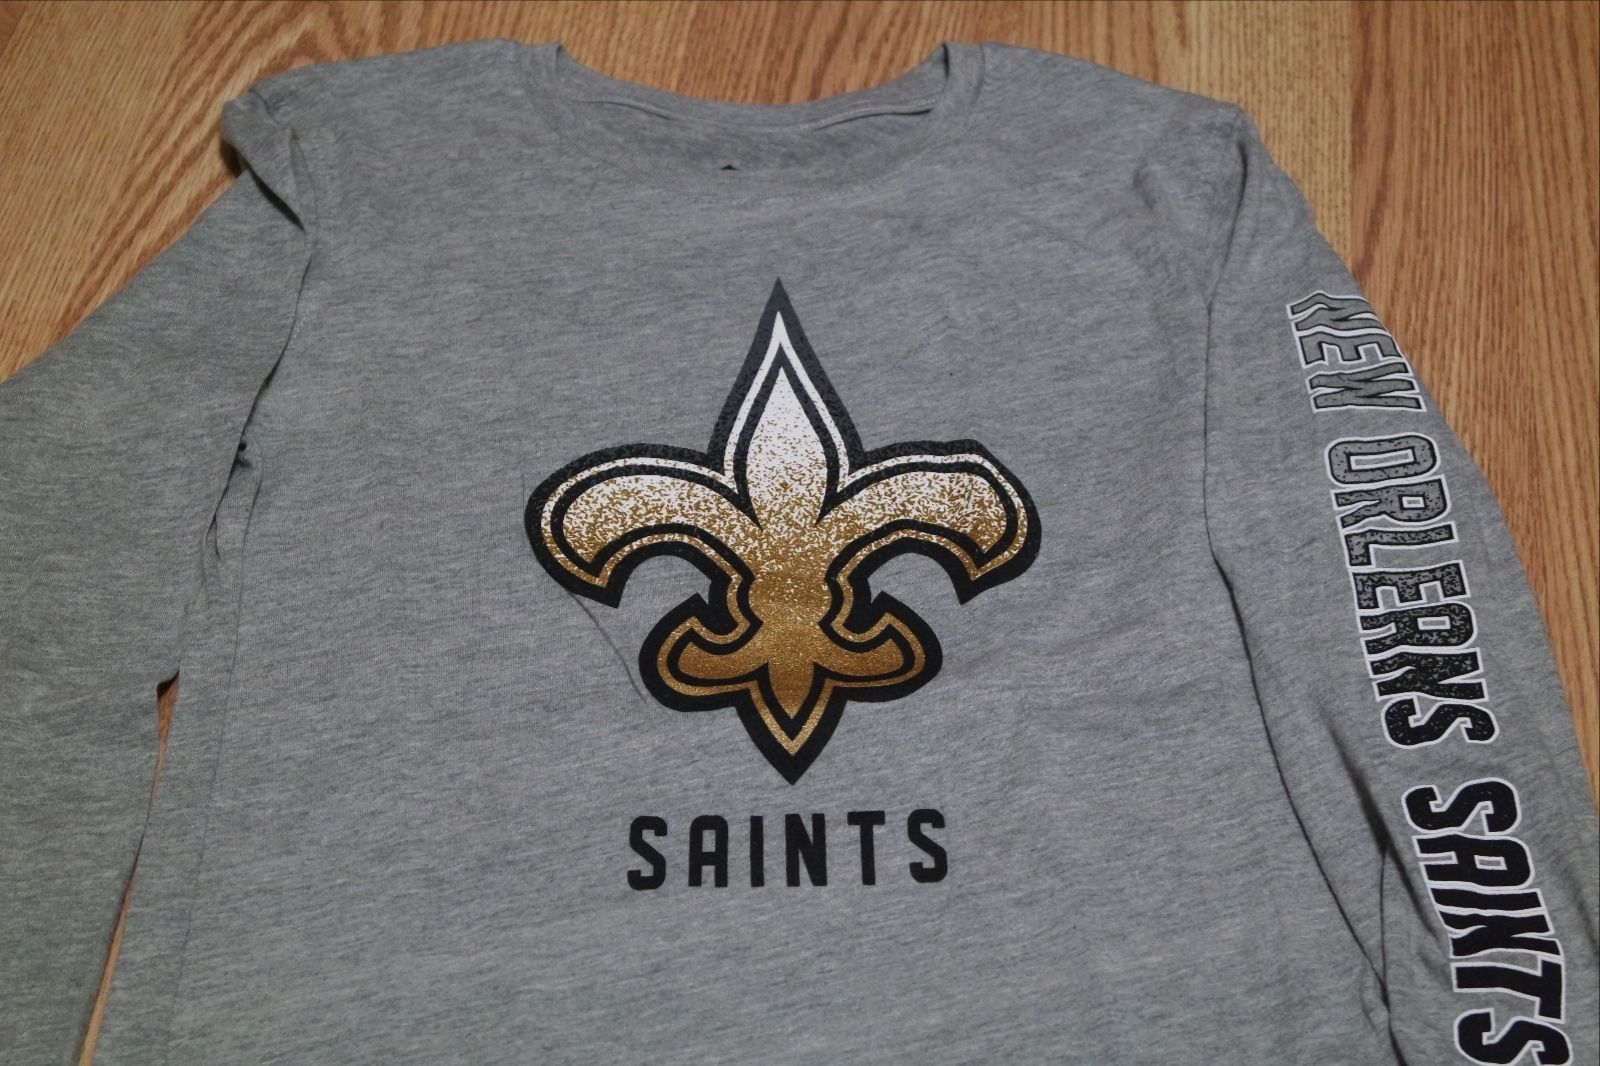 saints kids shirts